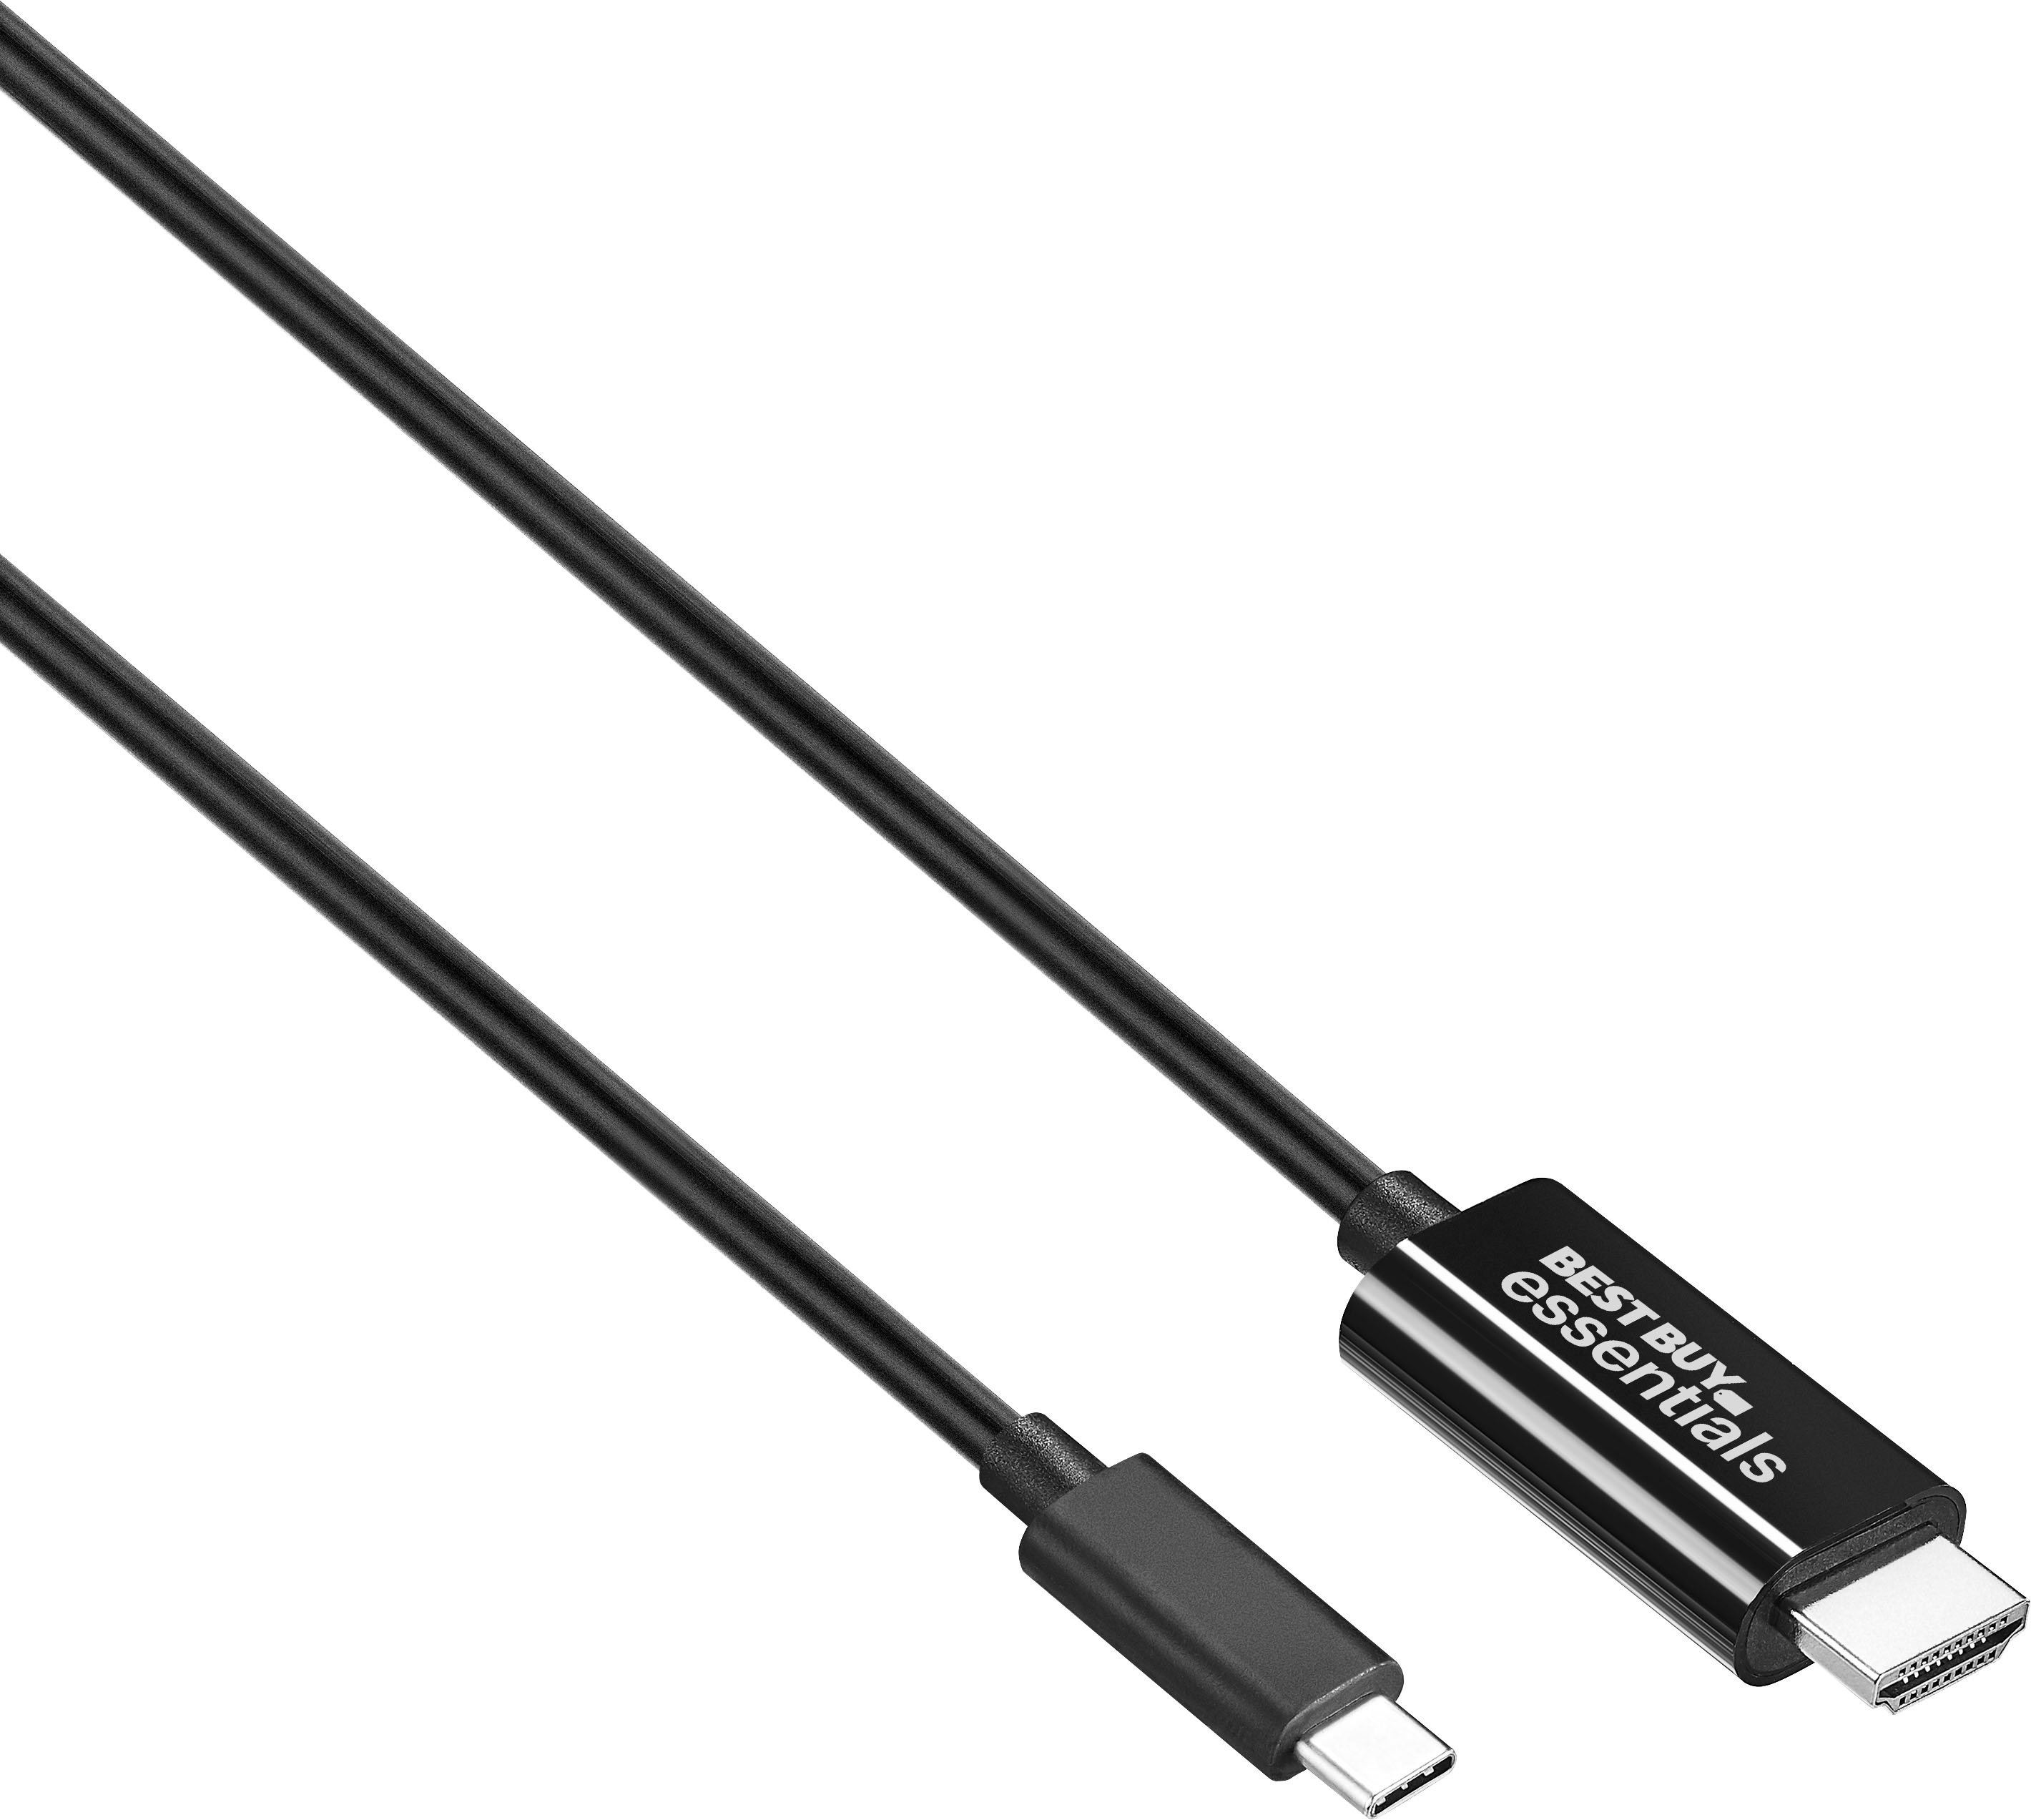 patrón Progreso En marcha Best Buy essentials™ 6' USB-C to HDMI Cable Black BE-PC3CHD6 - Best Buy